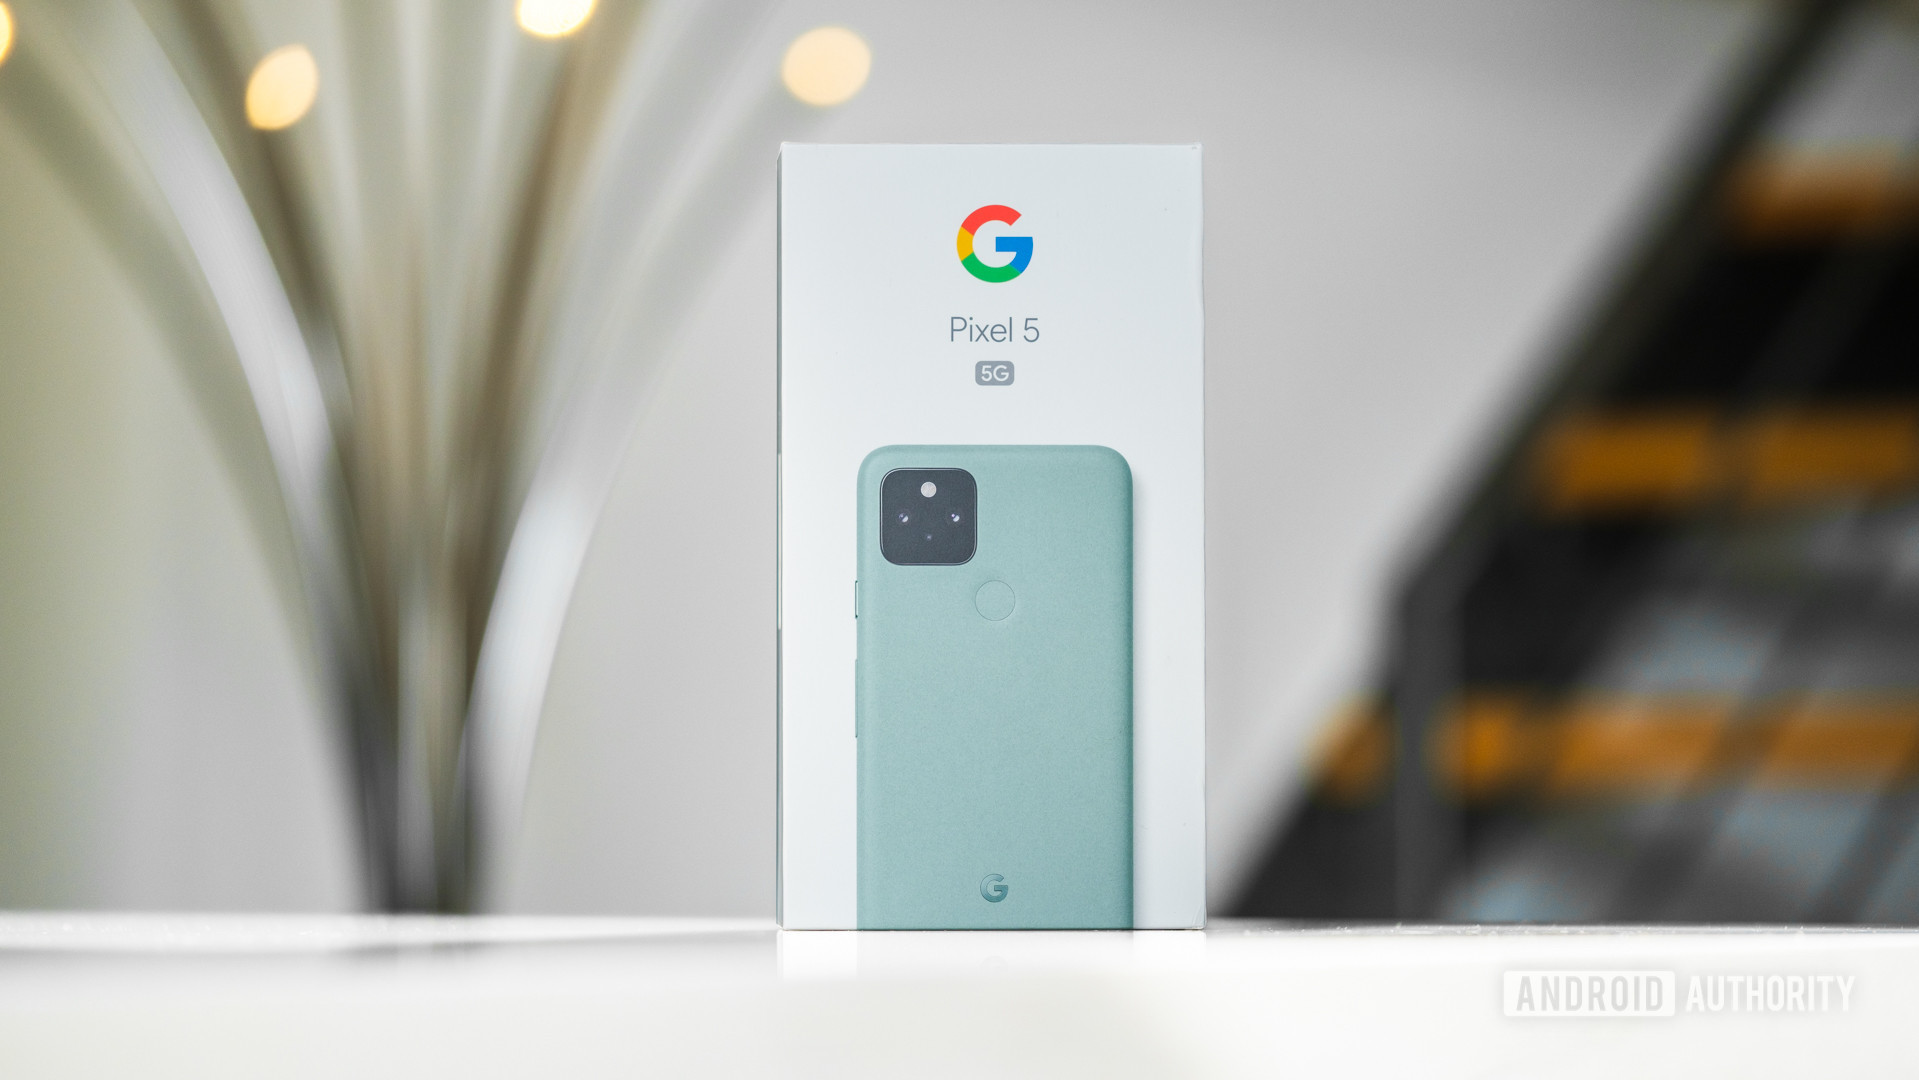 Google Pixel 5 box